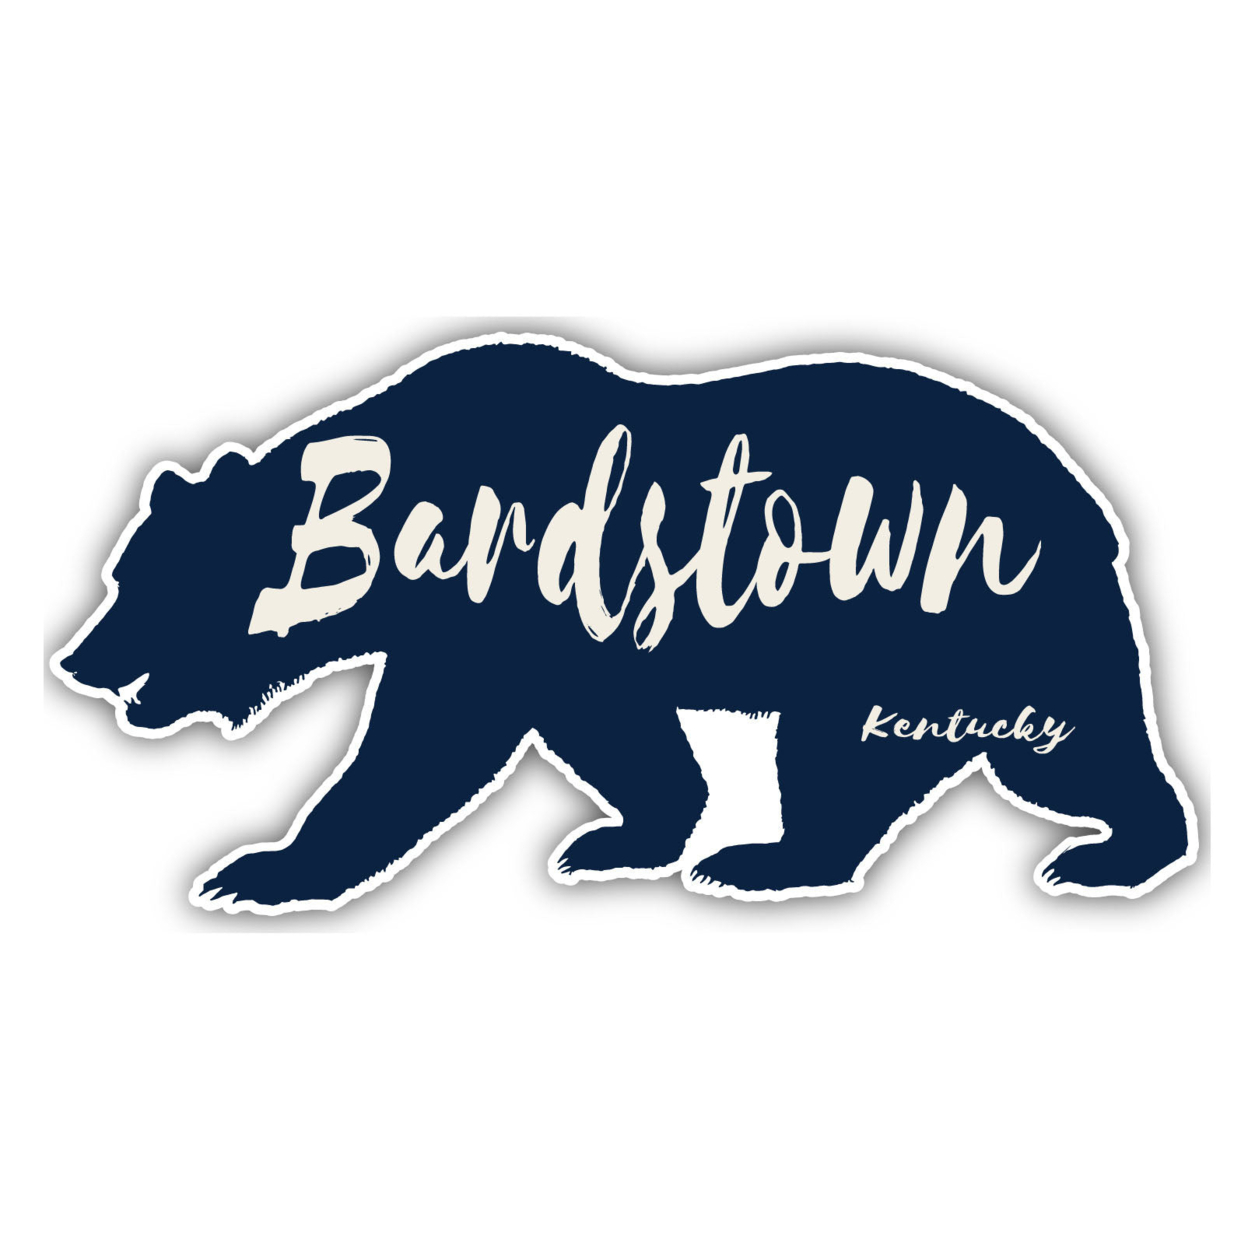 Bardstown Kentucky Souvenir Decorative Stickers (Choose Theme And Size) - Single Unit, 6-Inch, Bear